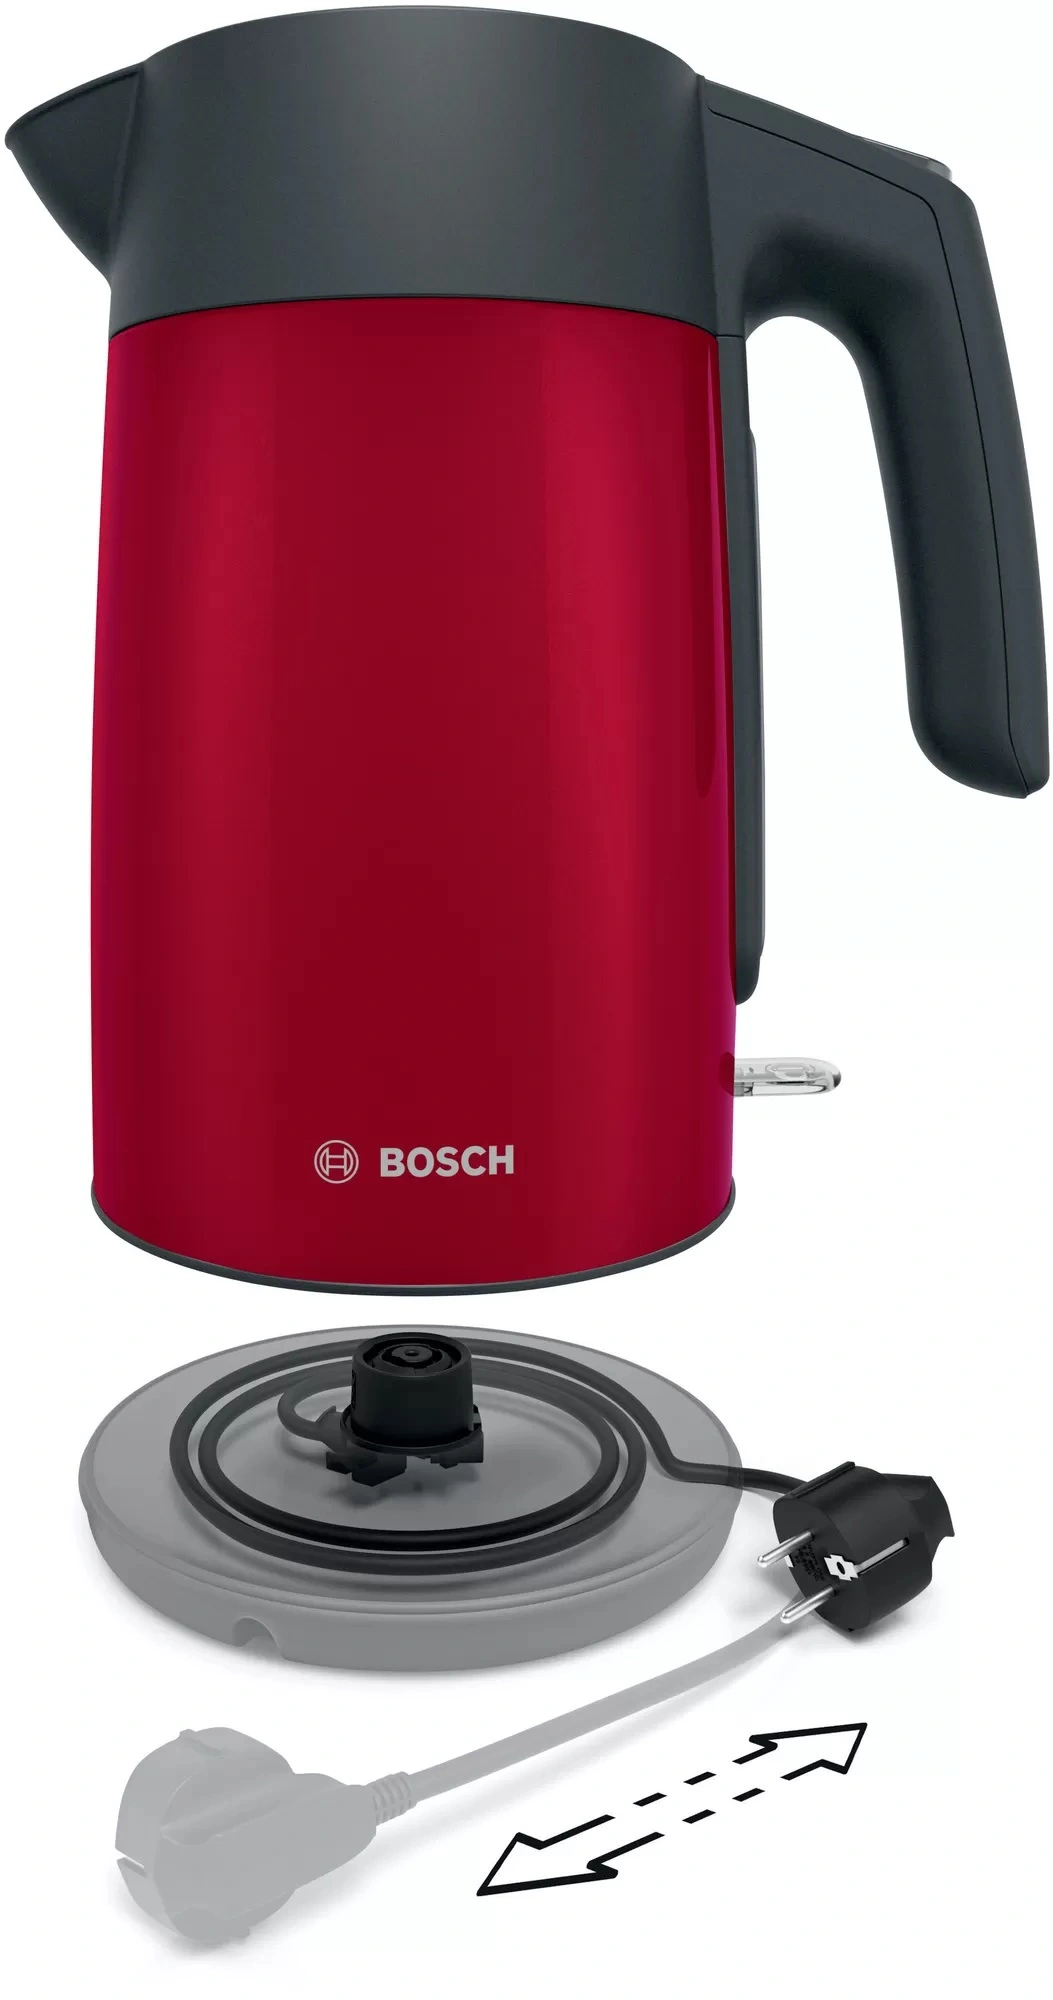 Bosch TWK 7L464, Red